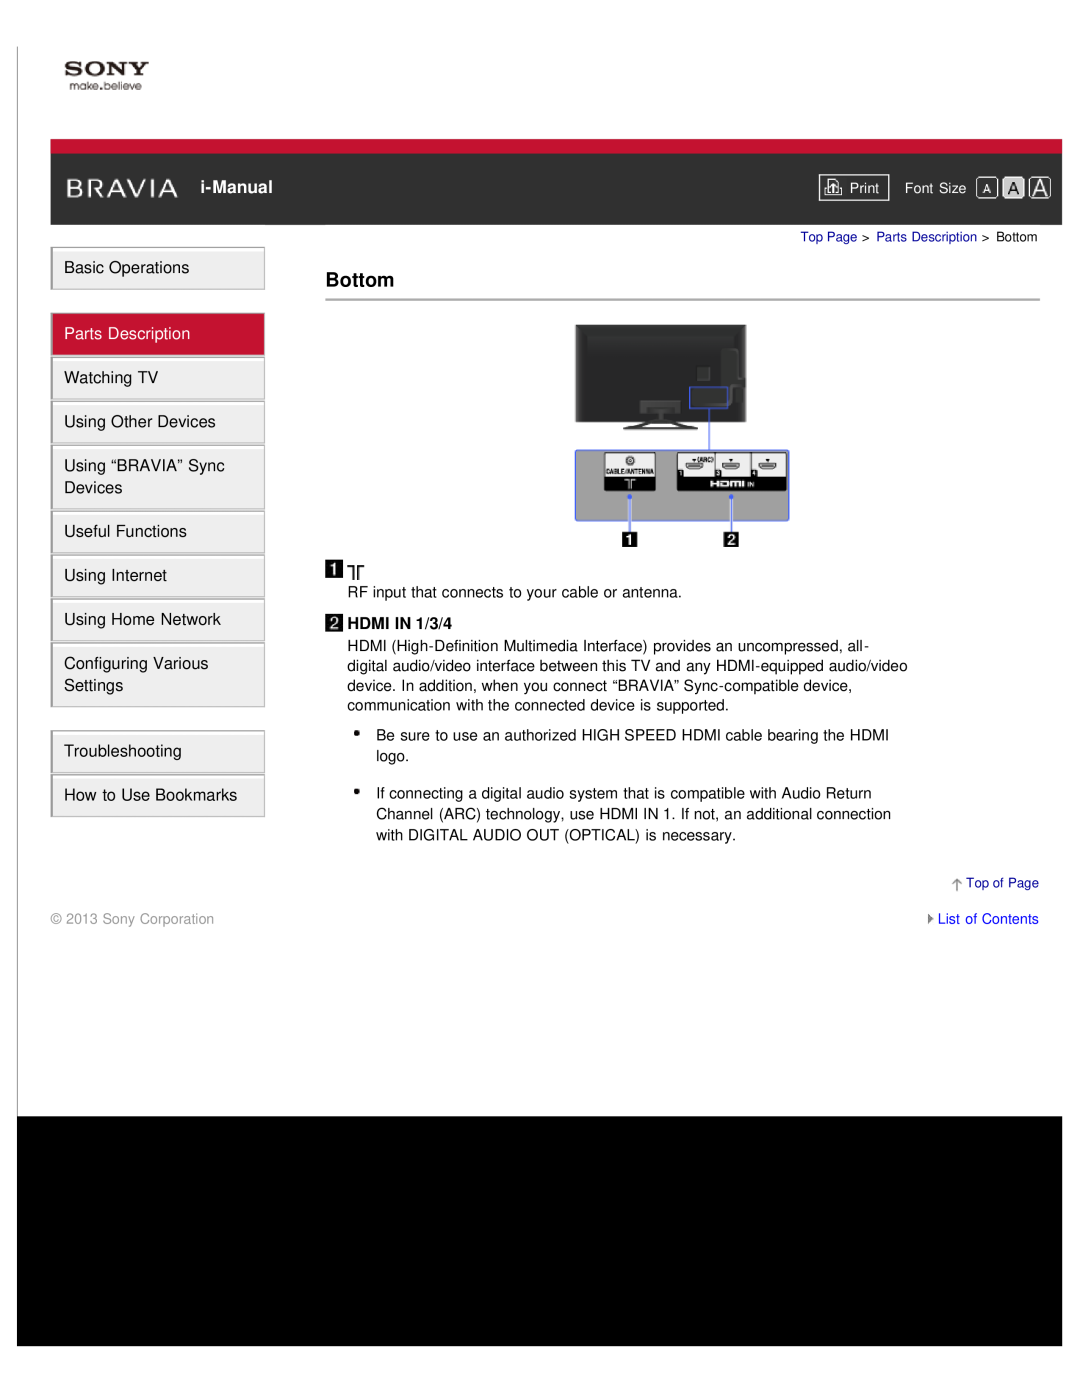 Sony KDL-55W900A, KDL55W900A manual Bottom, i-Manual, Parts Description, HDMI IN 1/3/4 